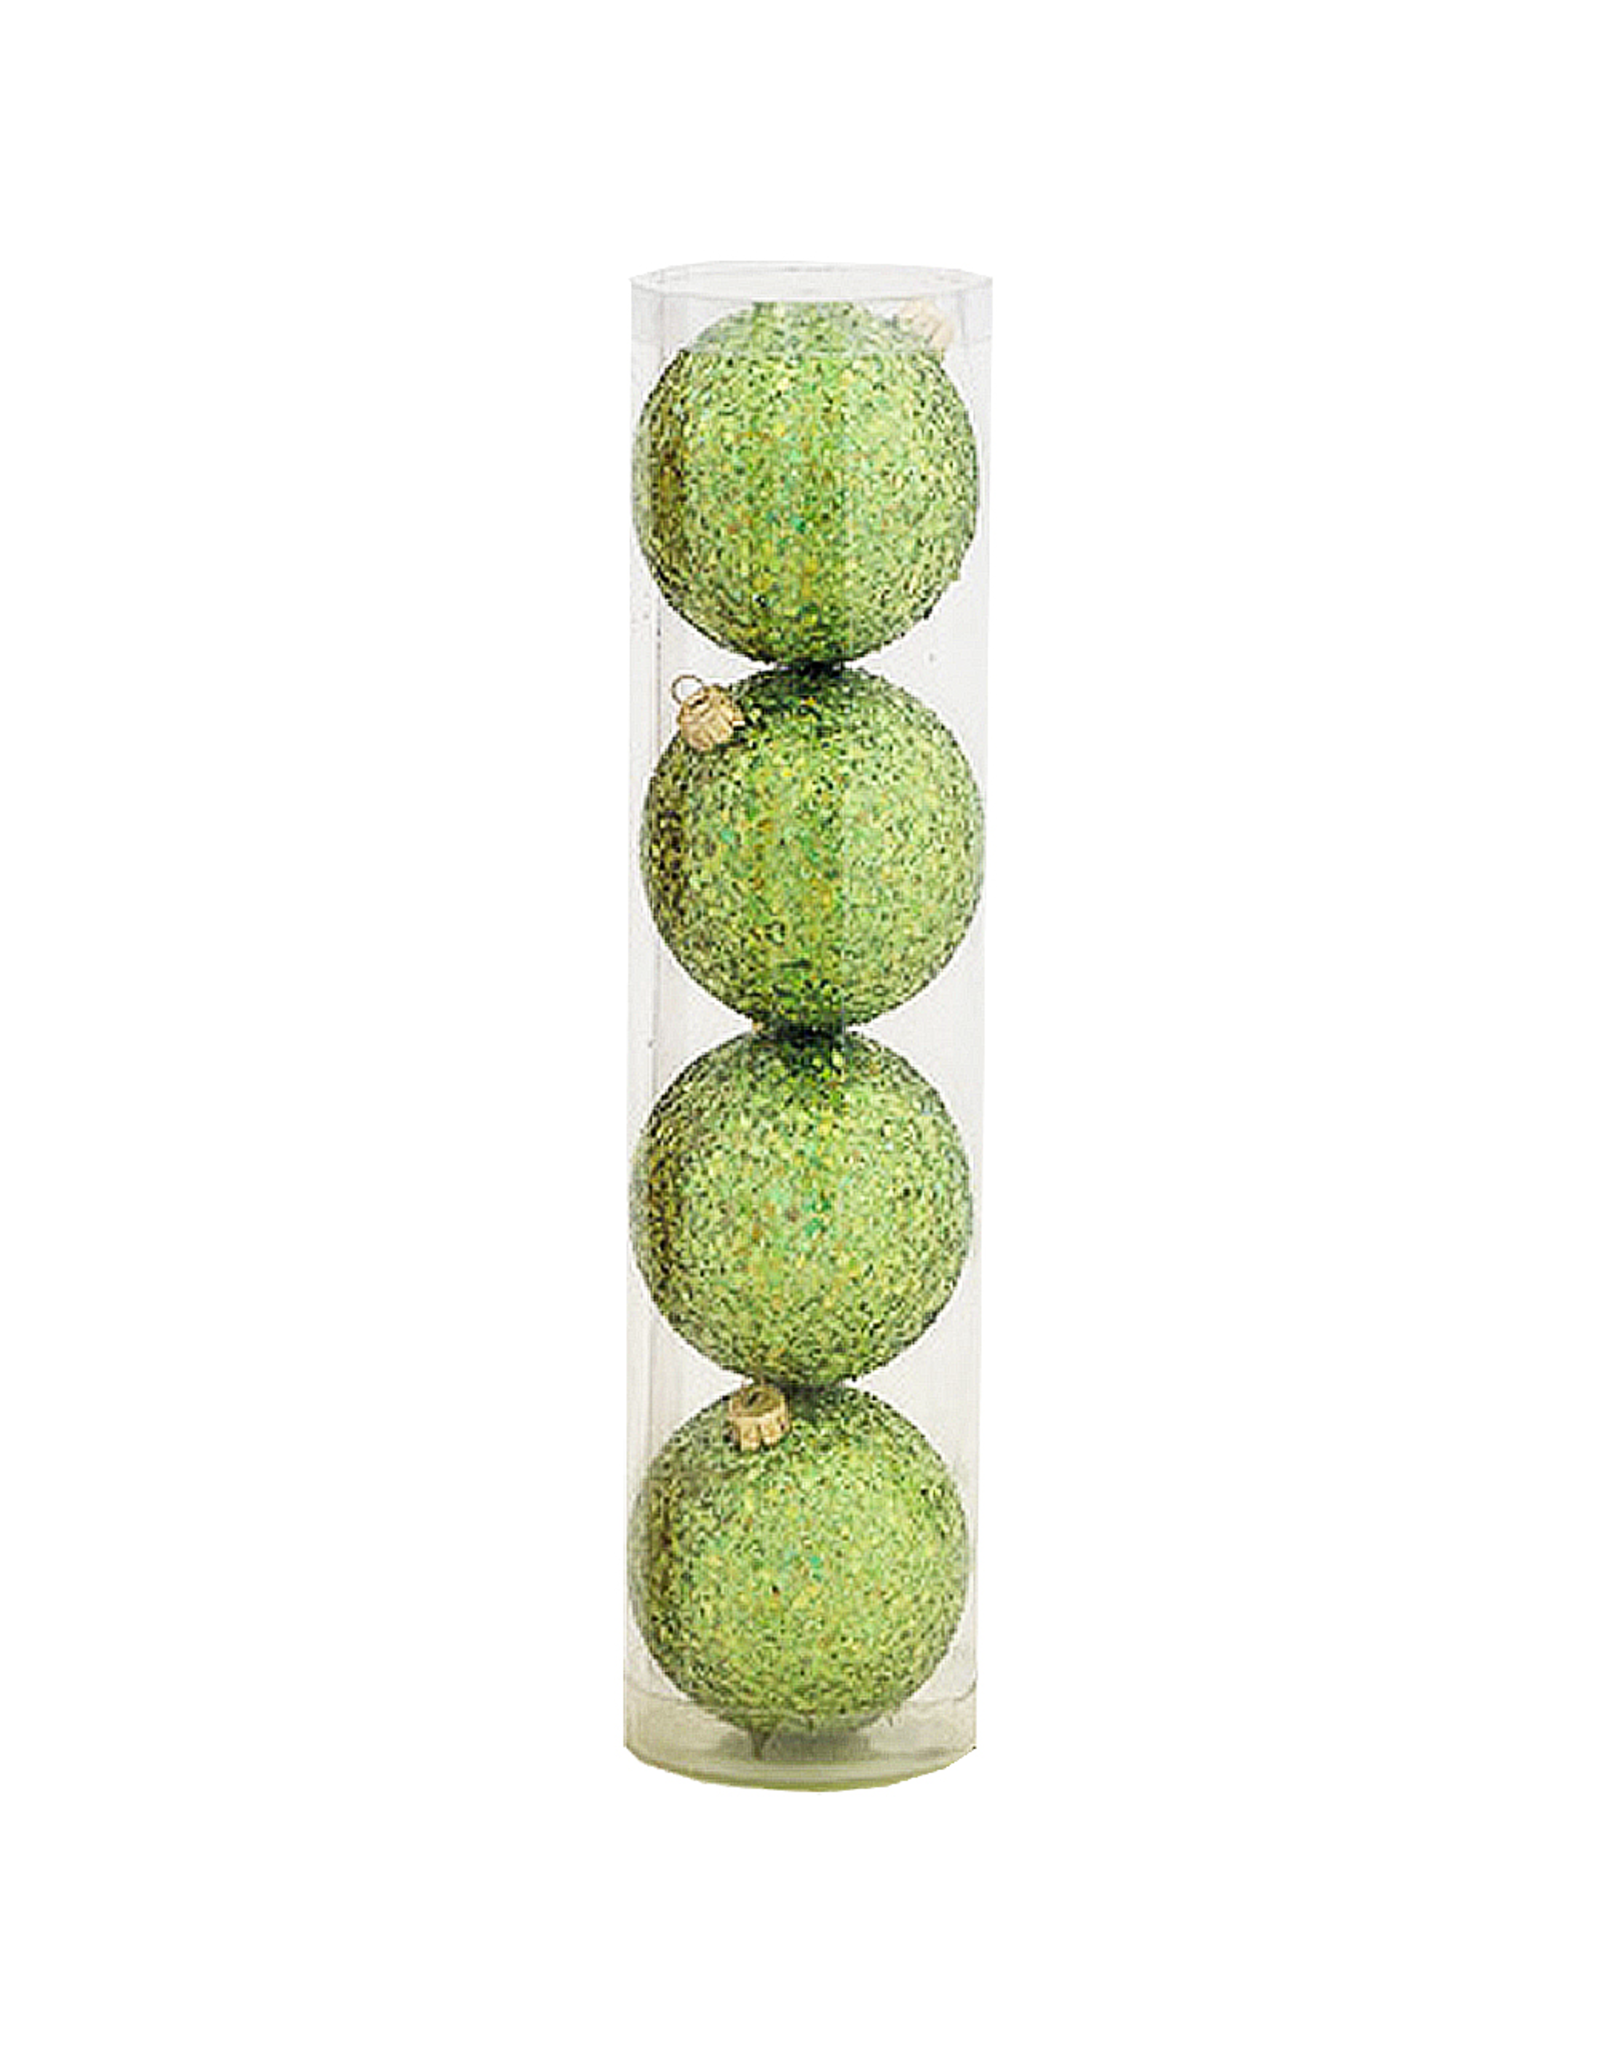 Kurt Adler Shatterproof Ball Ornaments Green Glittered 80MM Set of 4